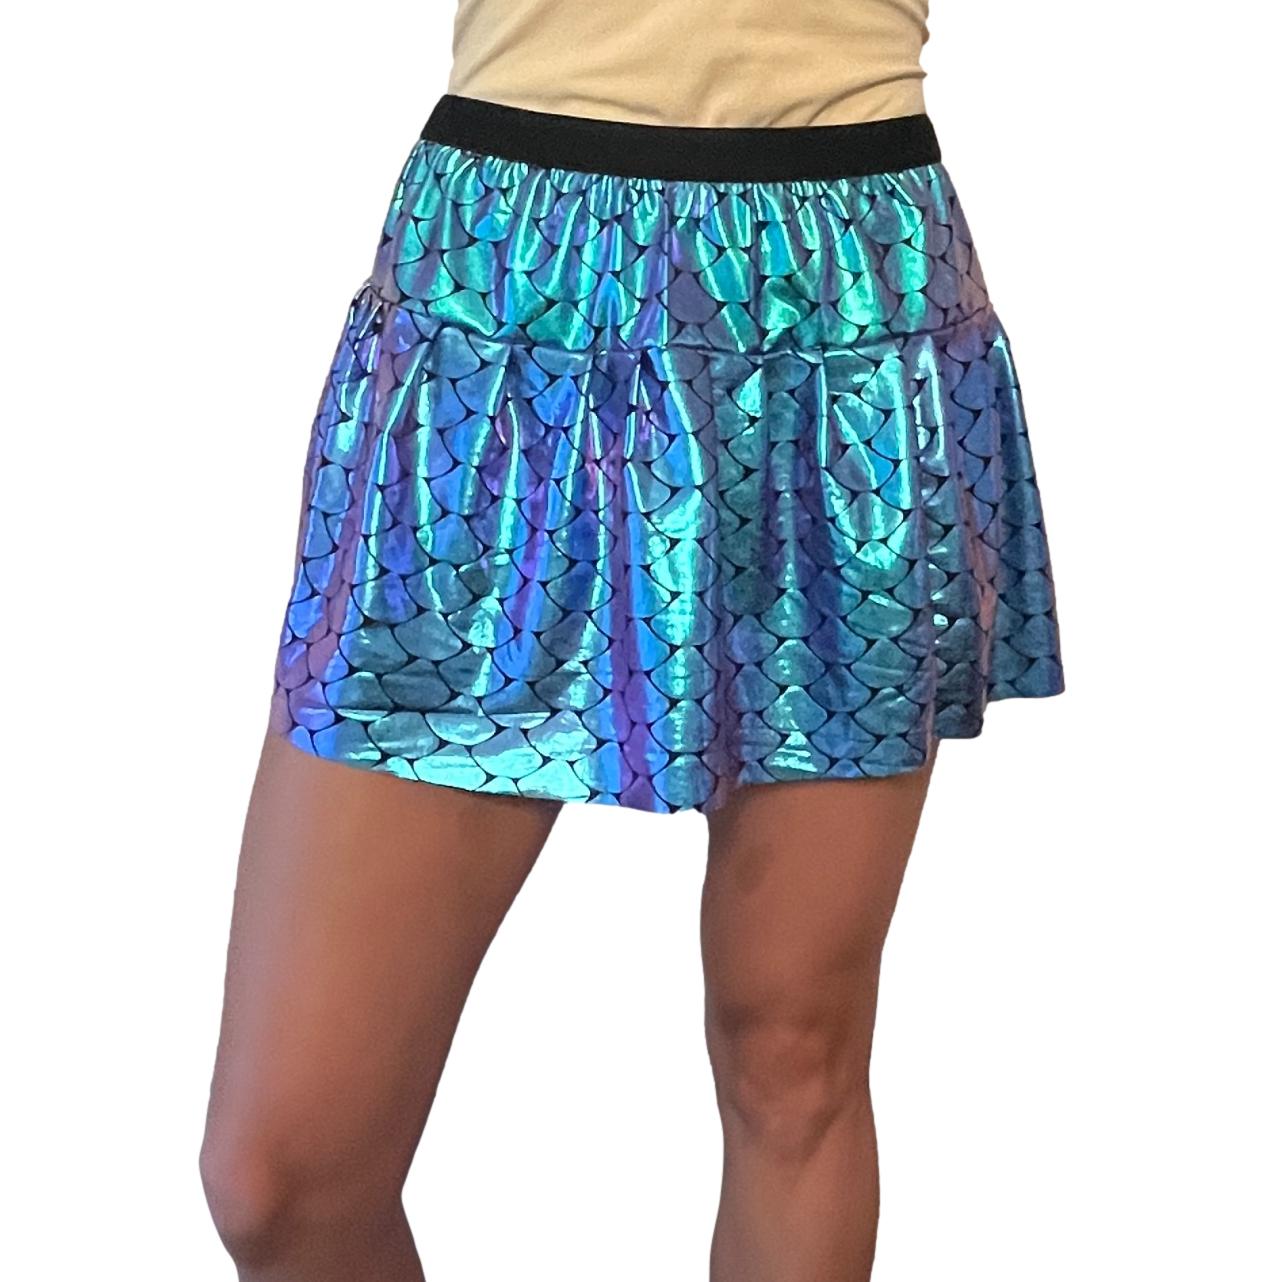 Holographic Mermaid Scale Running Skirt